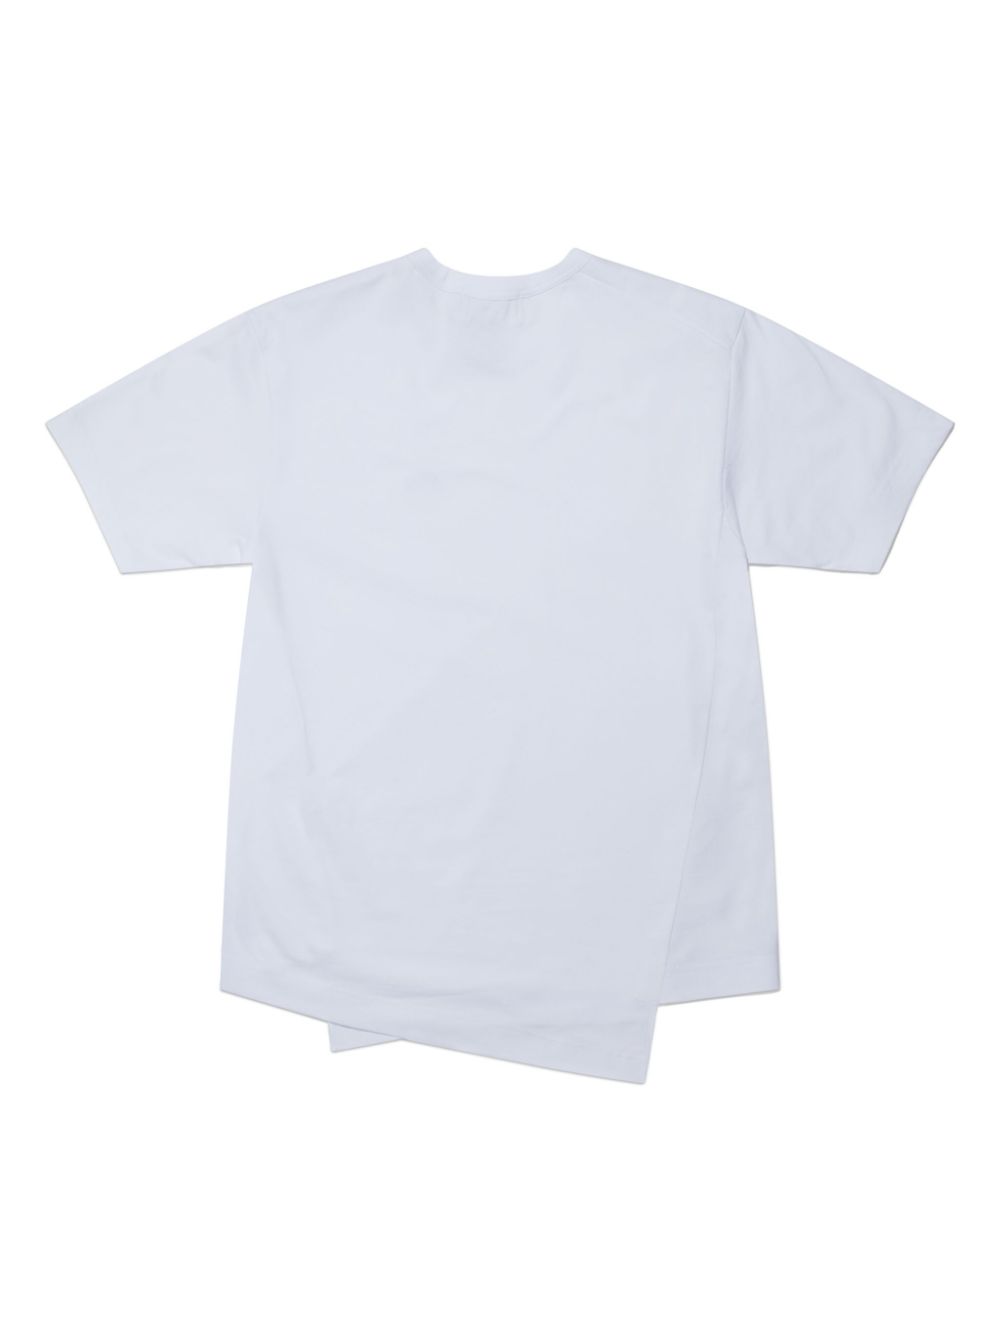 t-shirt bianca asimmetrica per Lacoste